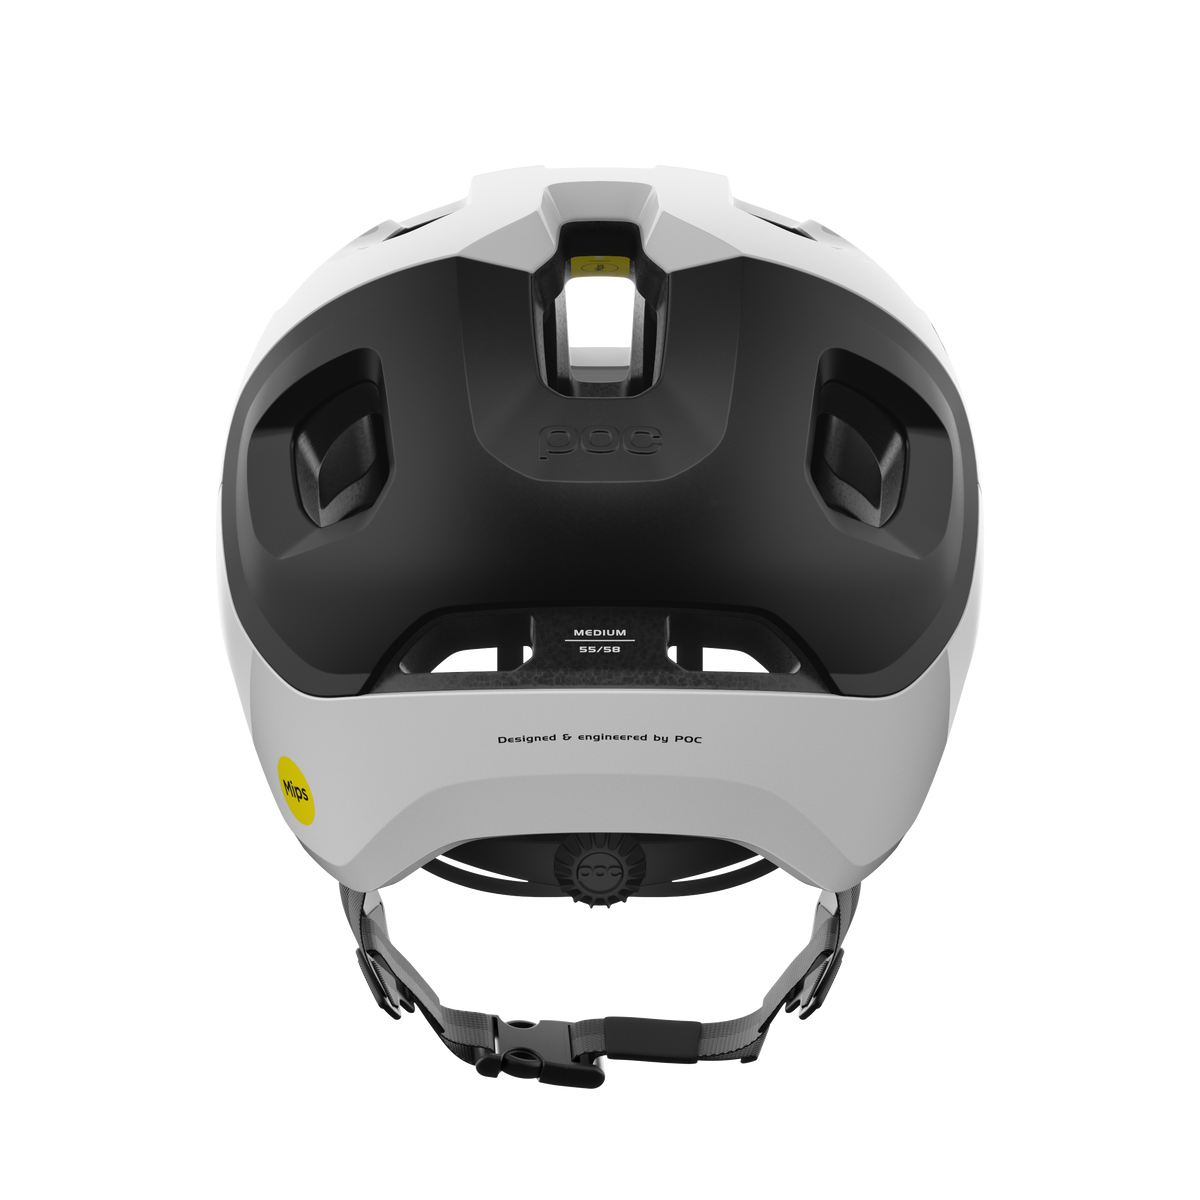 Axion Race MIPS Helmet